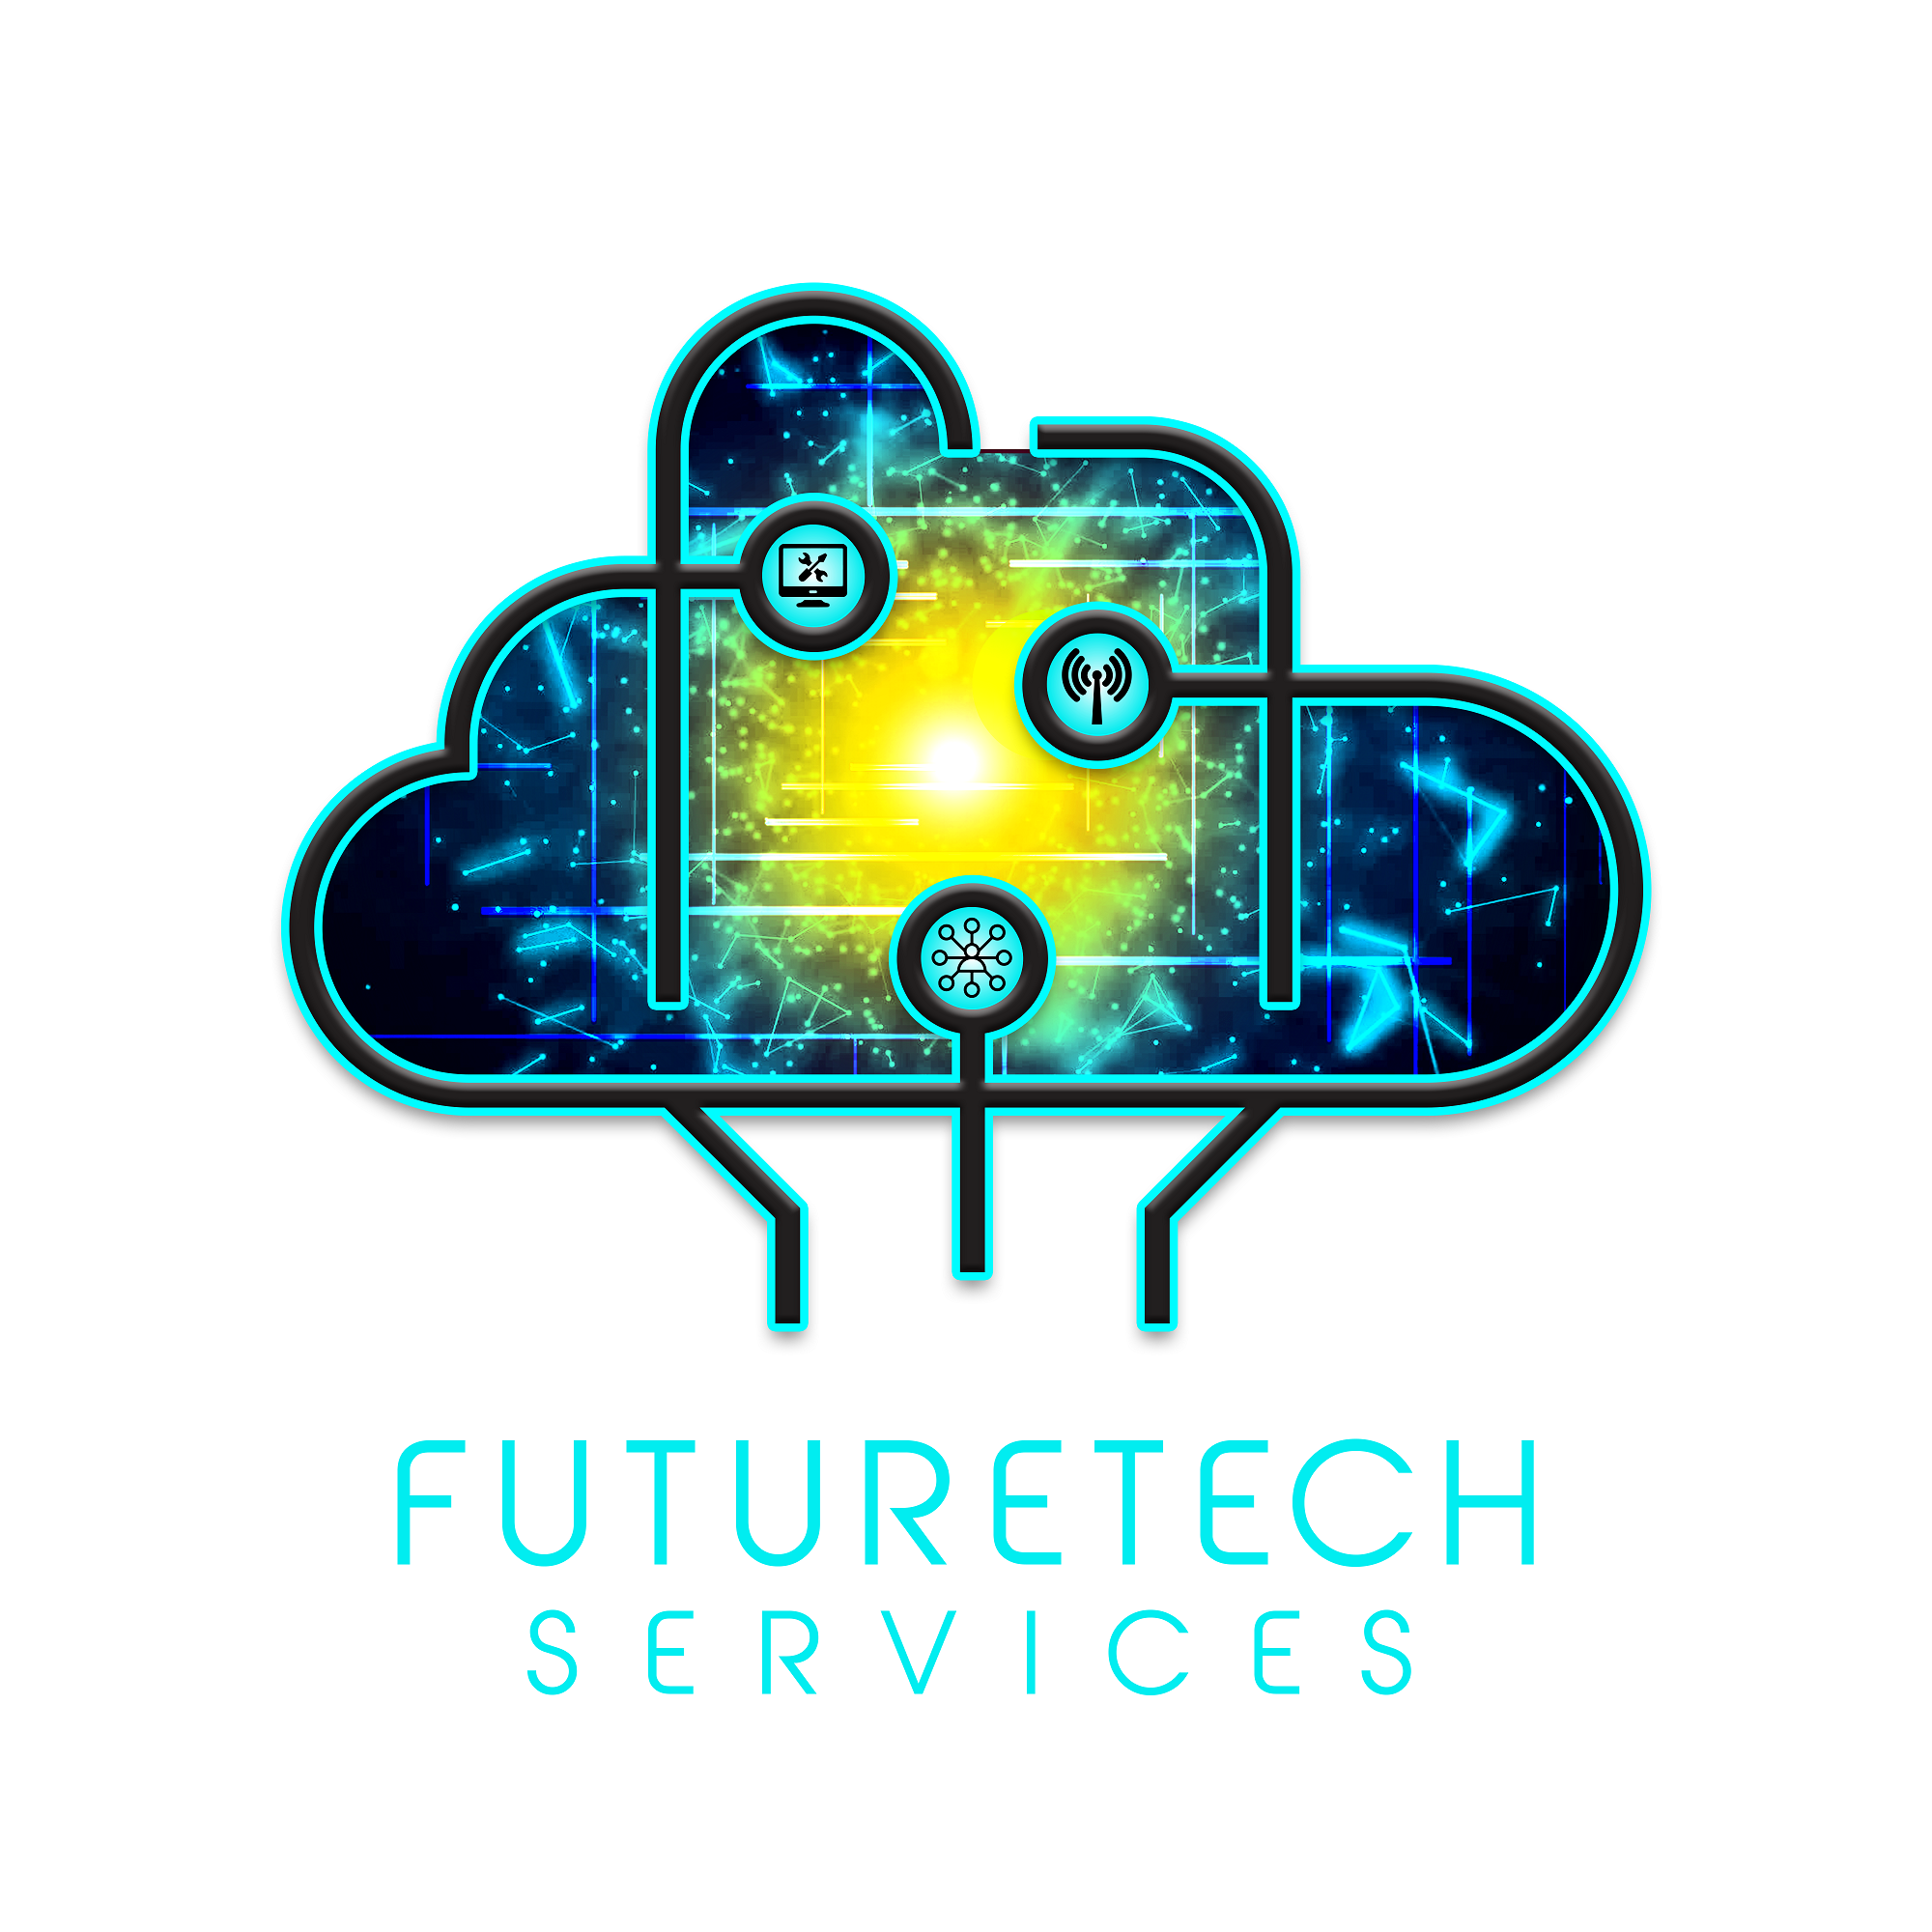 FutureTech Services